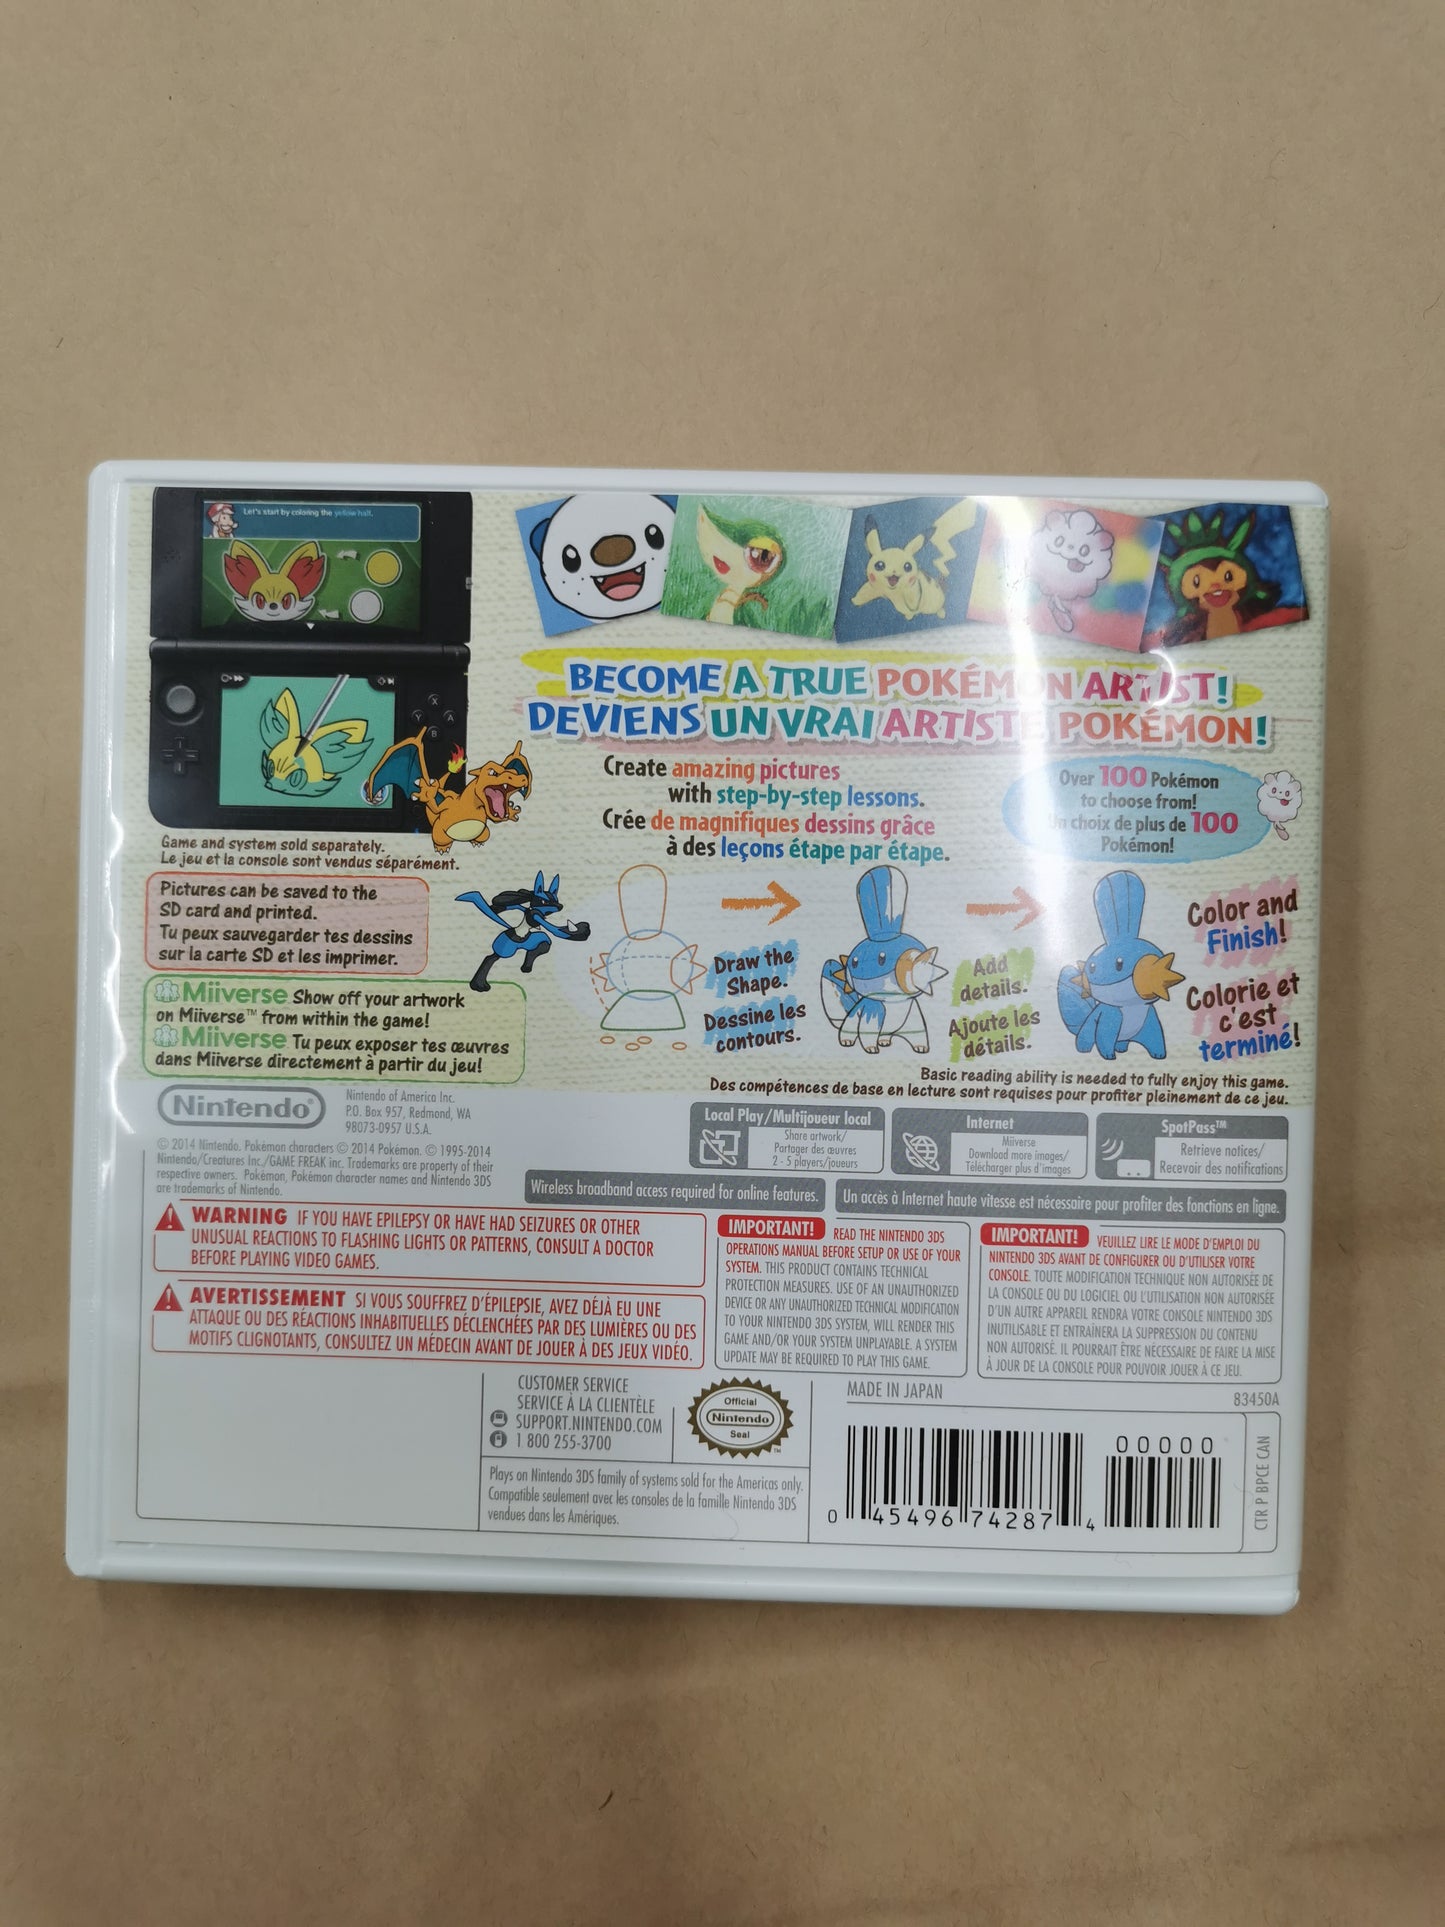 Pokemon Art Academy Nintendo 3DS